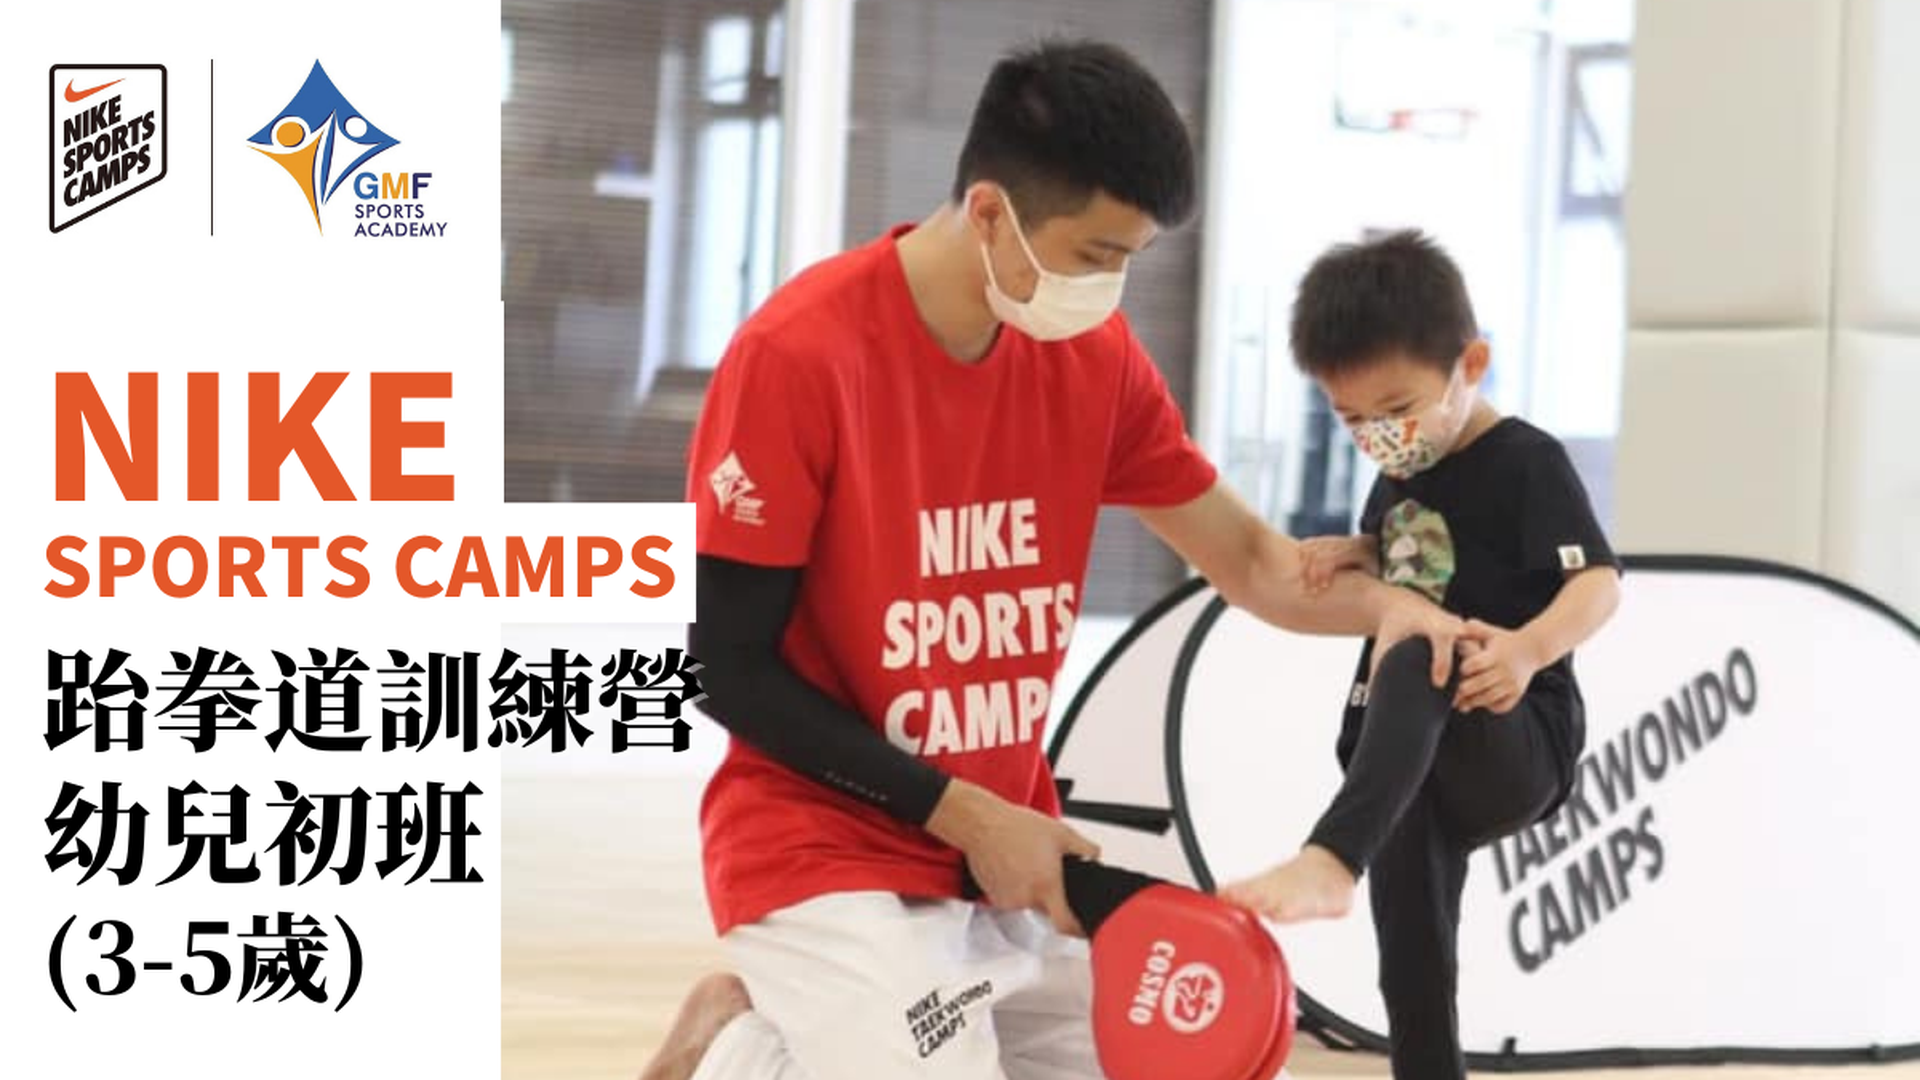 NIKE SPORTS CAMPS 跆拳道訓練營幼兒初班 (3-5歲)